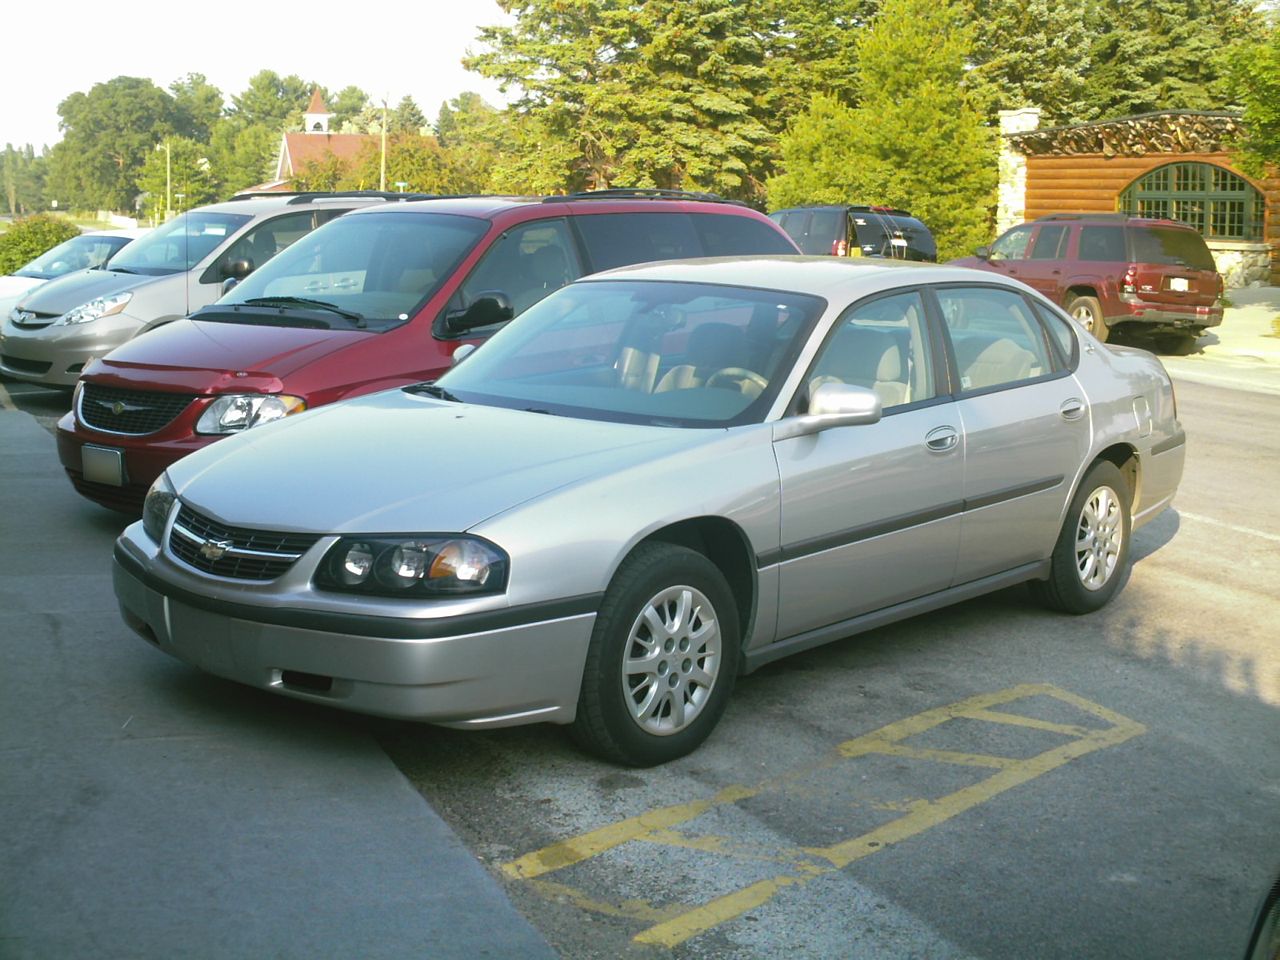 File:Chevrolet Impala 2005.jpg - Wikimedia Commons